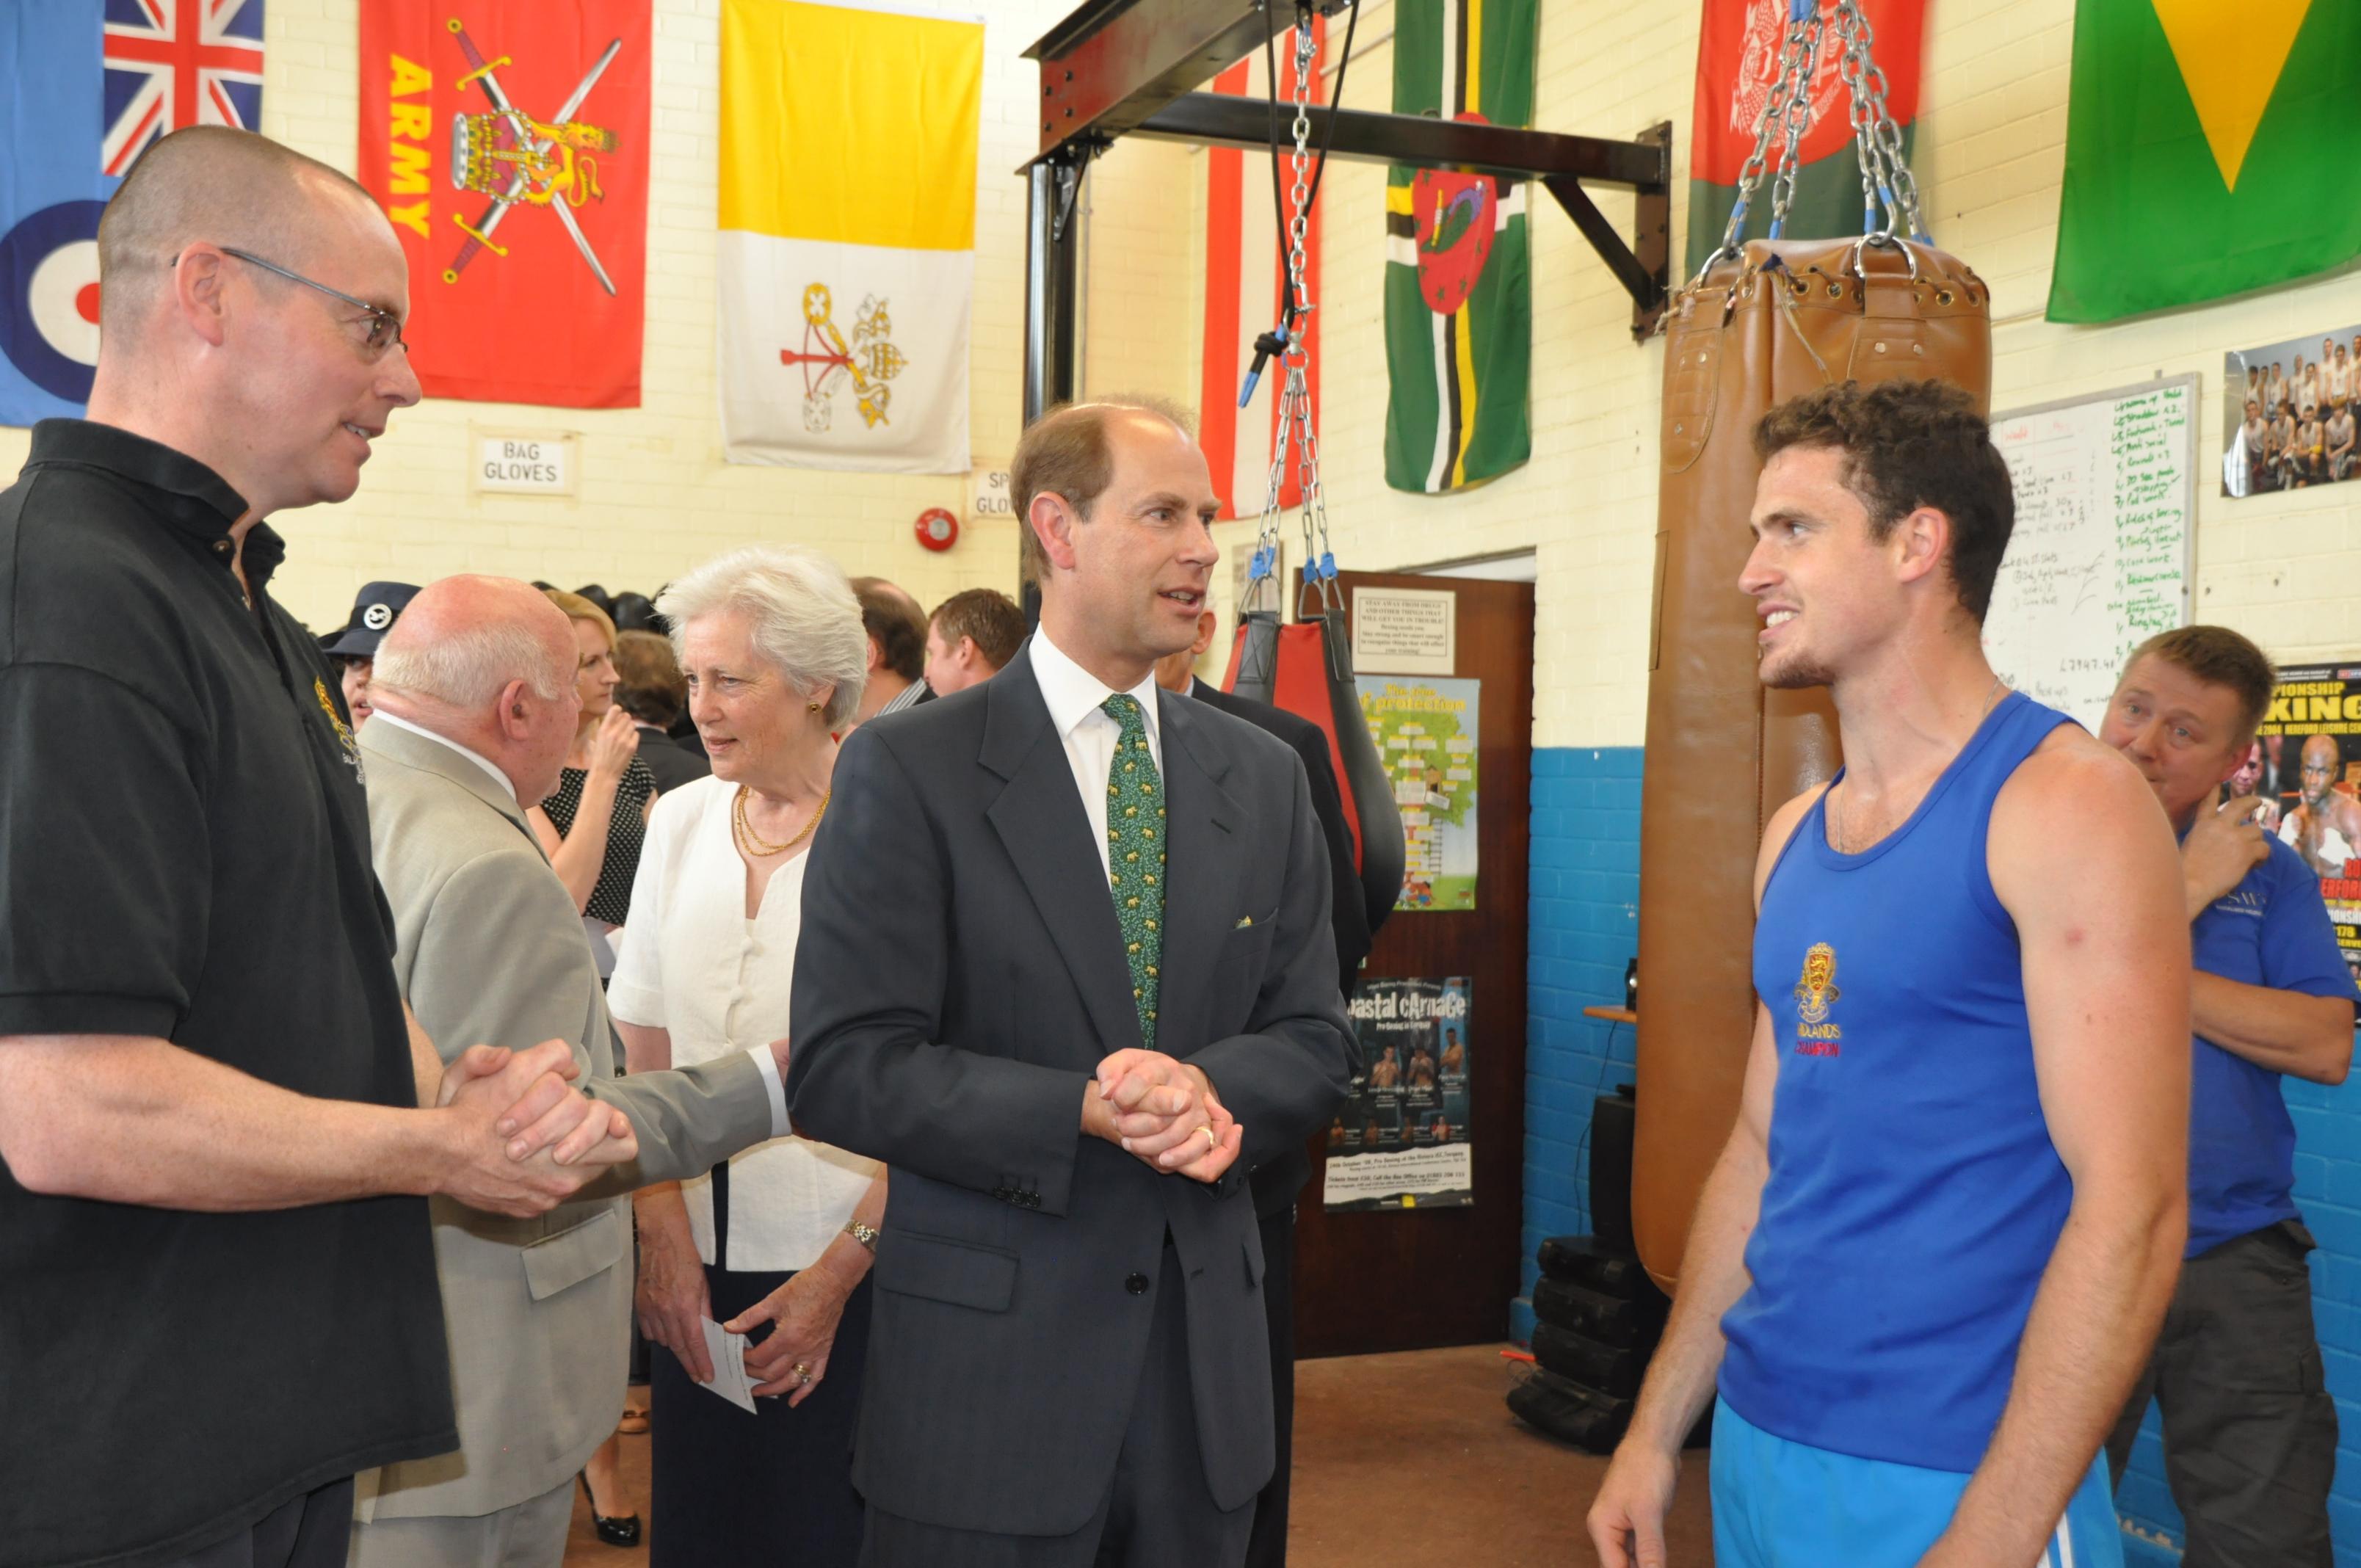 Prince Edward visitng Hinton Community Centre